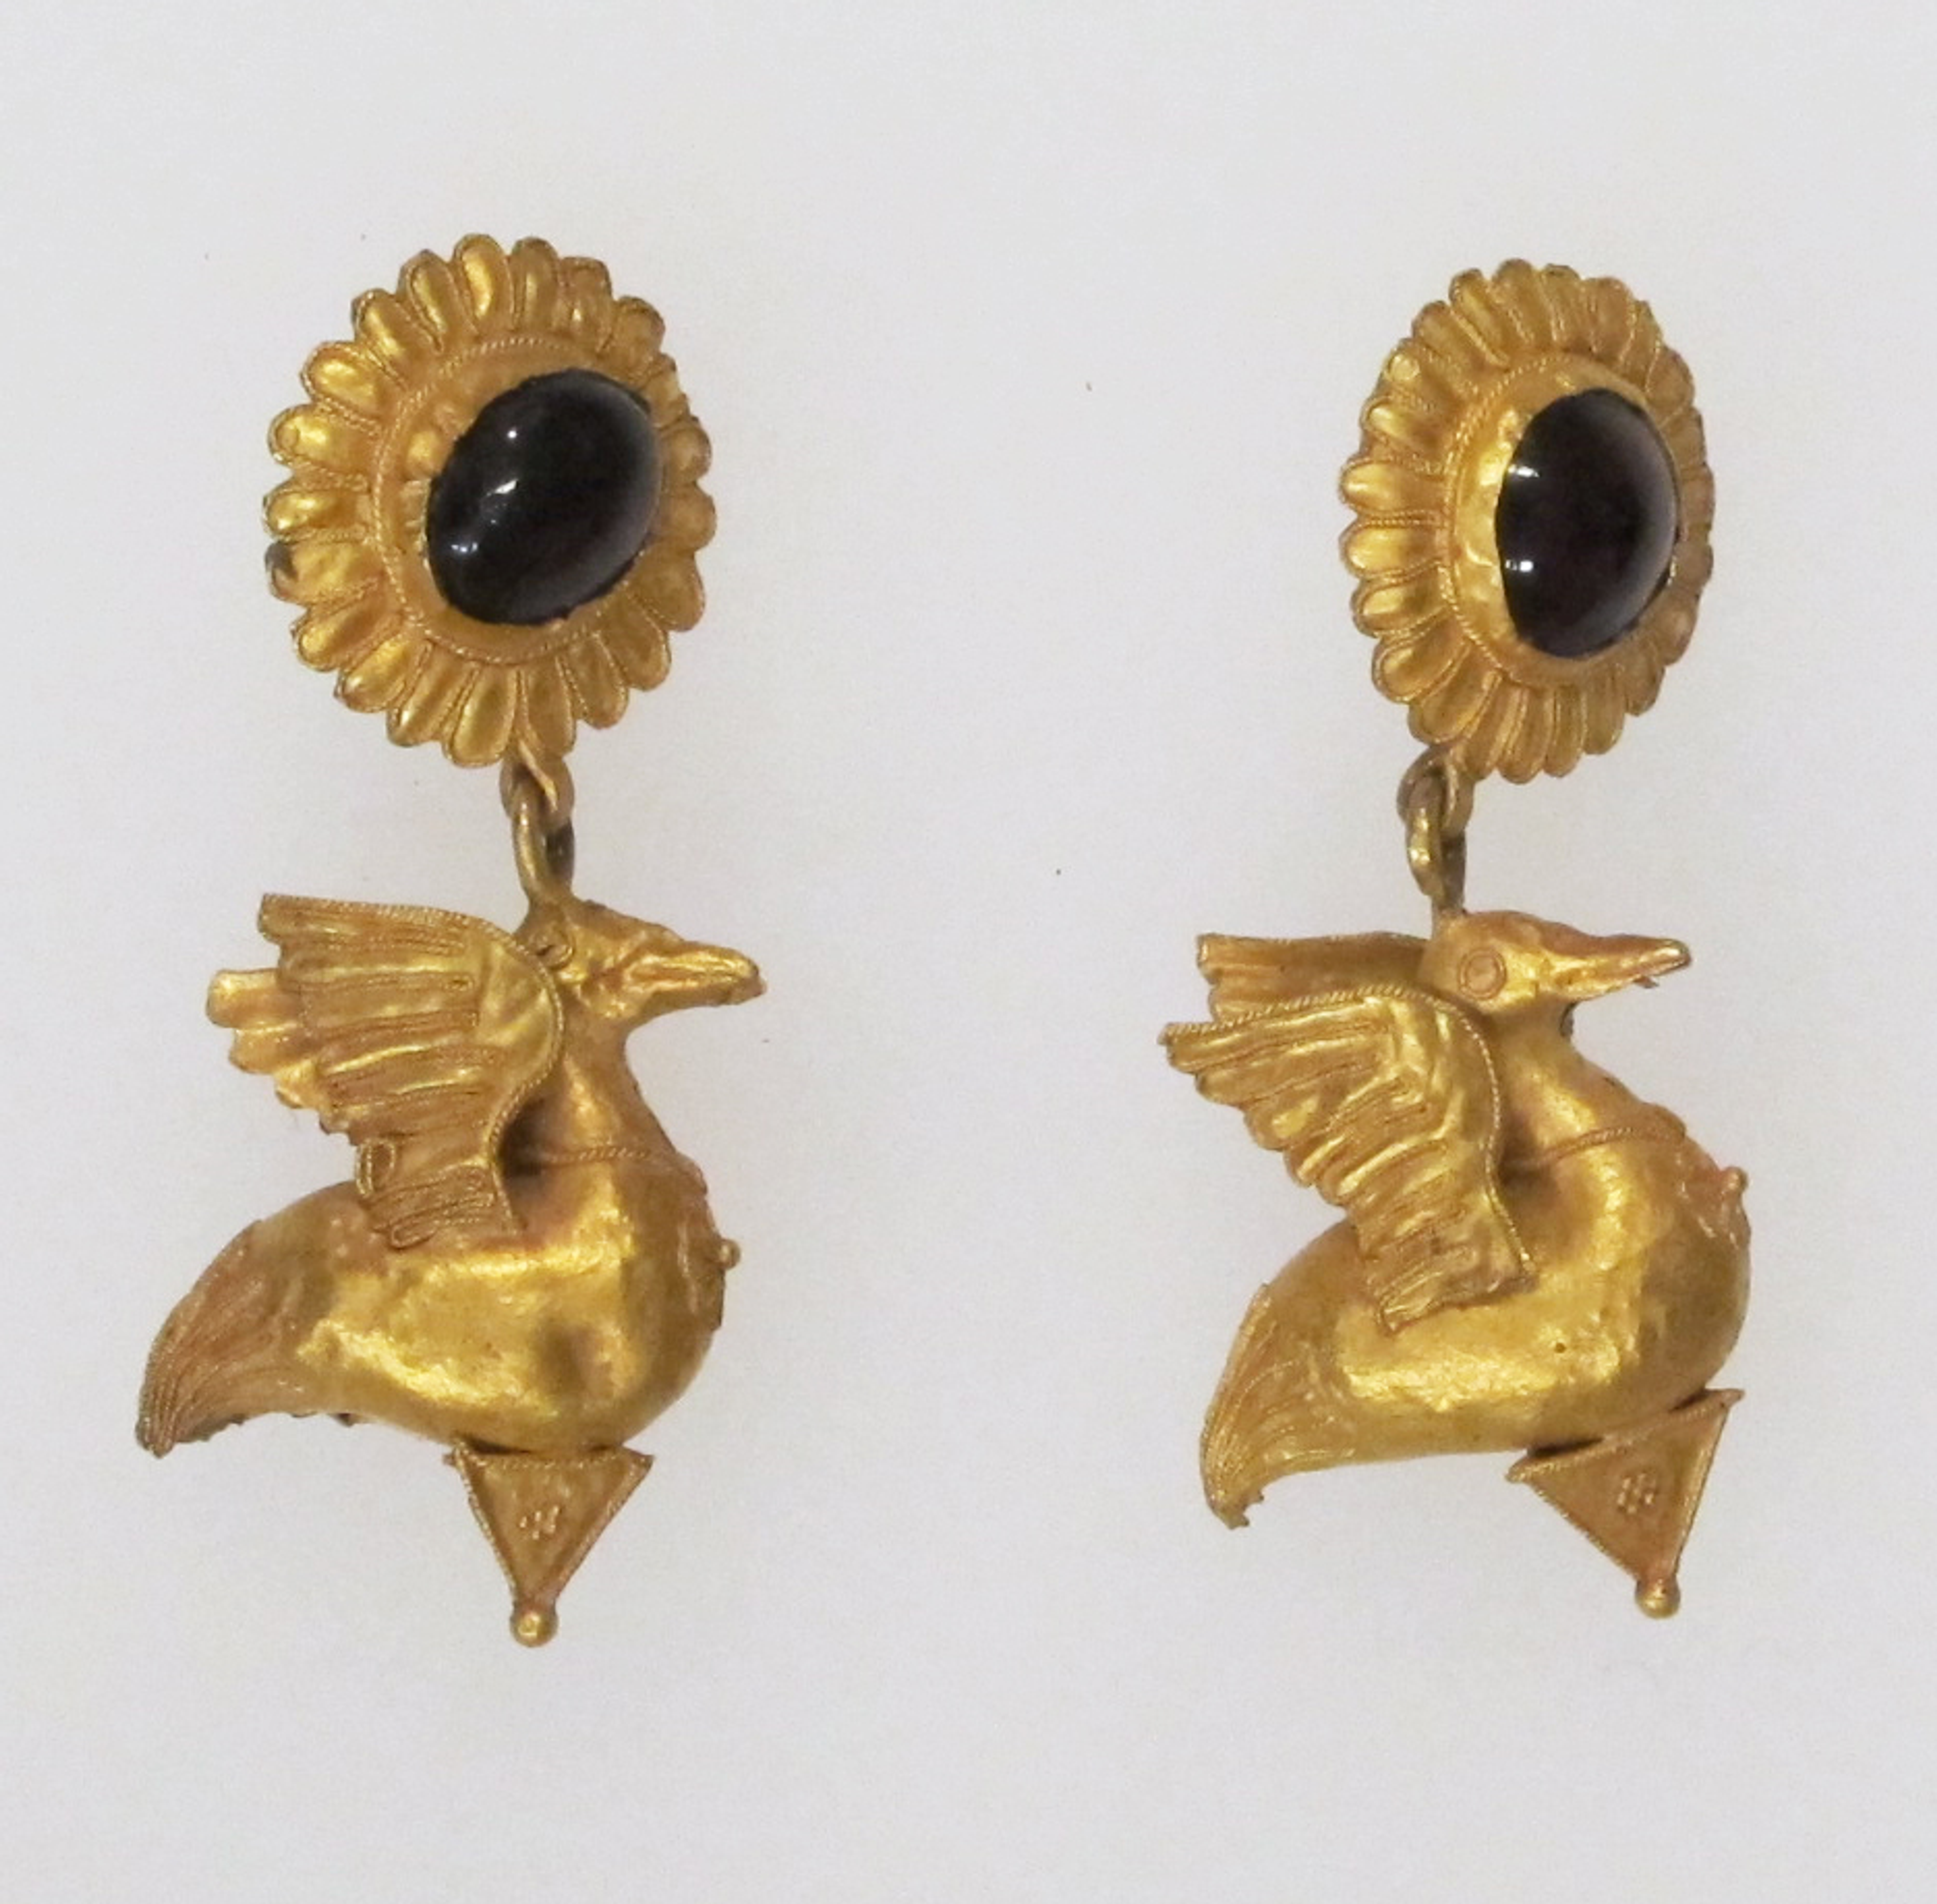 Earrings with pendants of birds, Greek, 4th century B.C., Metropolitan Museum of Art. 